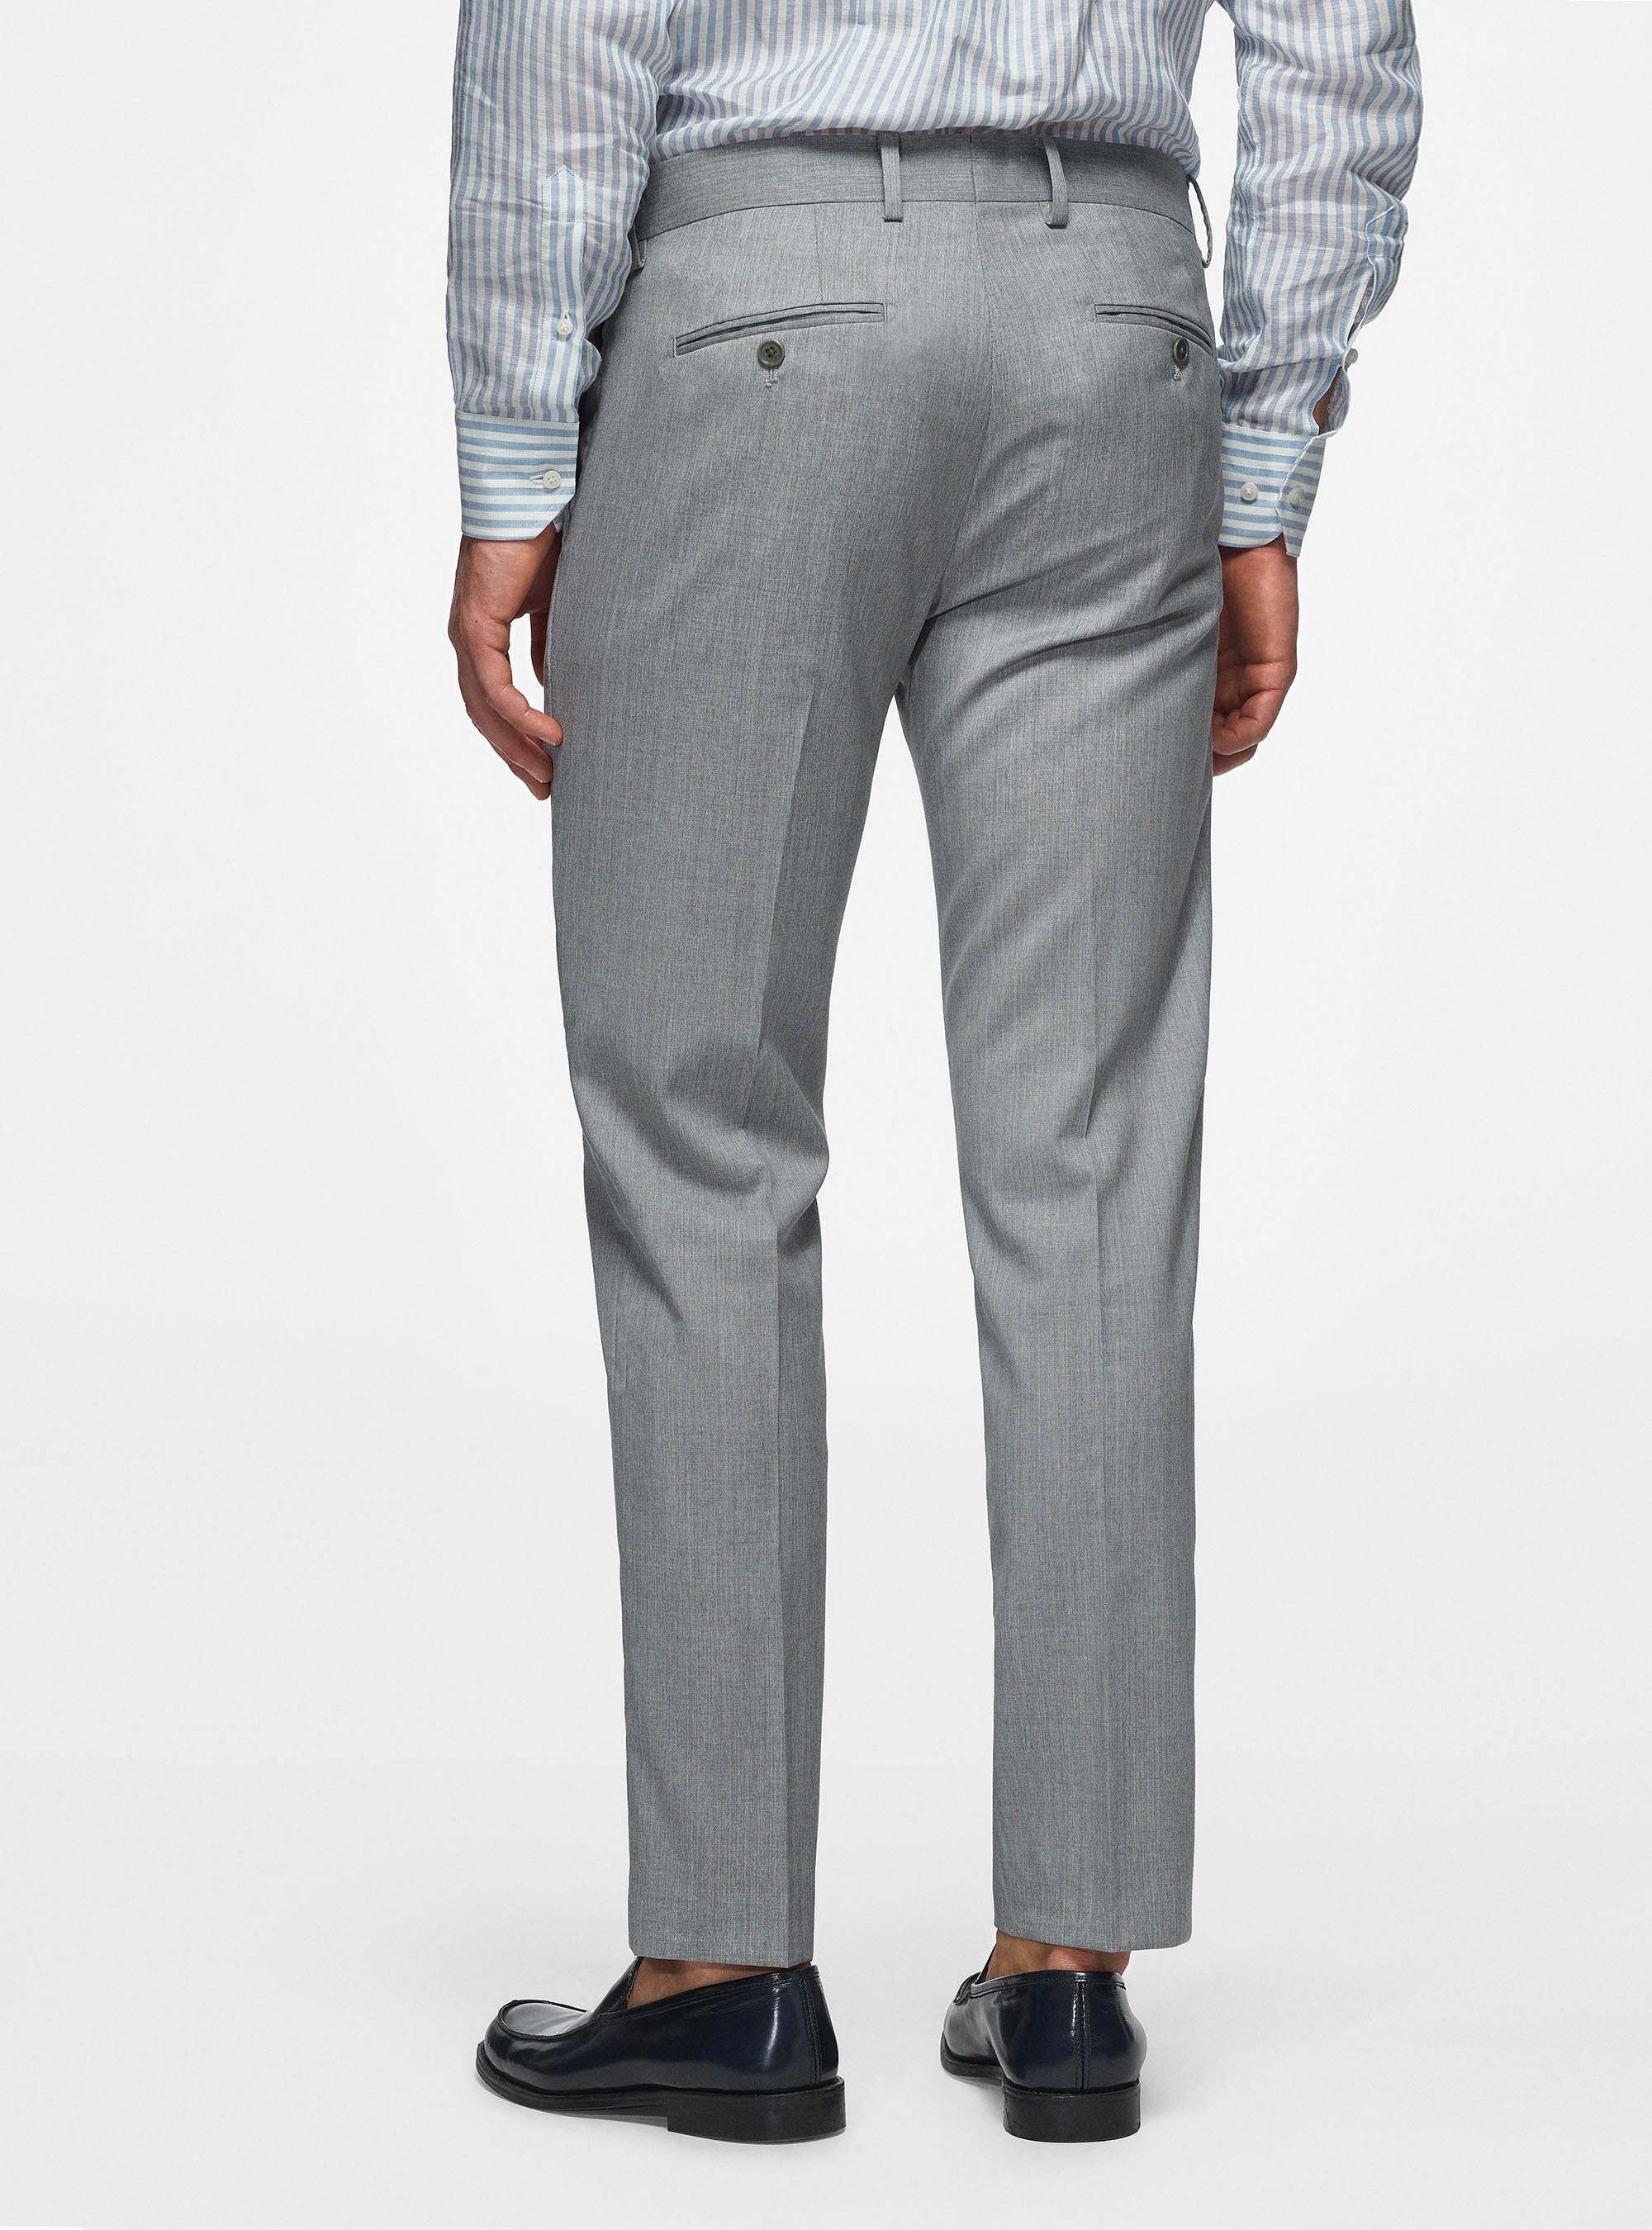 væske hænge Render Suit trousers in pure superfine wool 110's Vitale Barberis Canonico |  GutteridgeUS | Suits Uomo